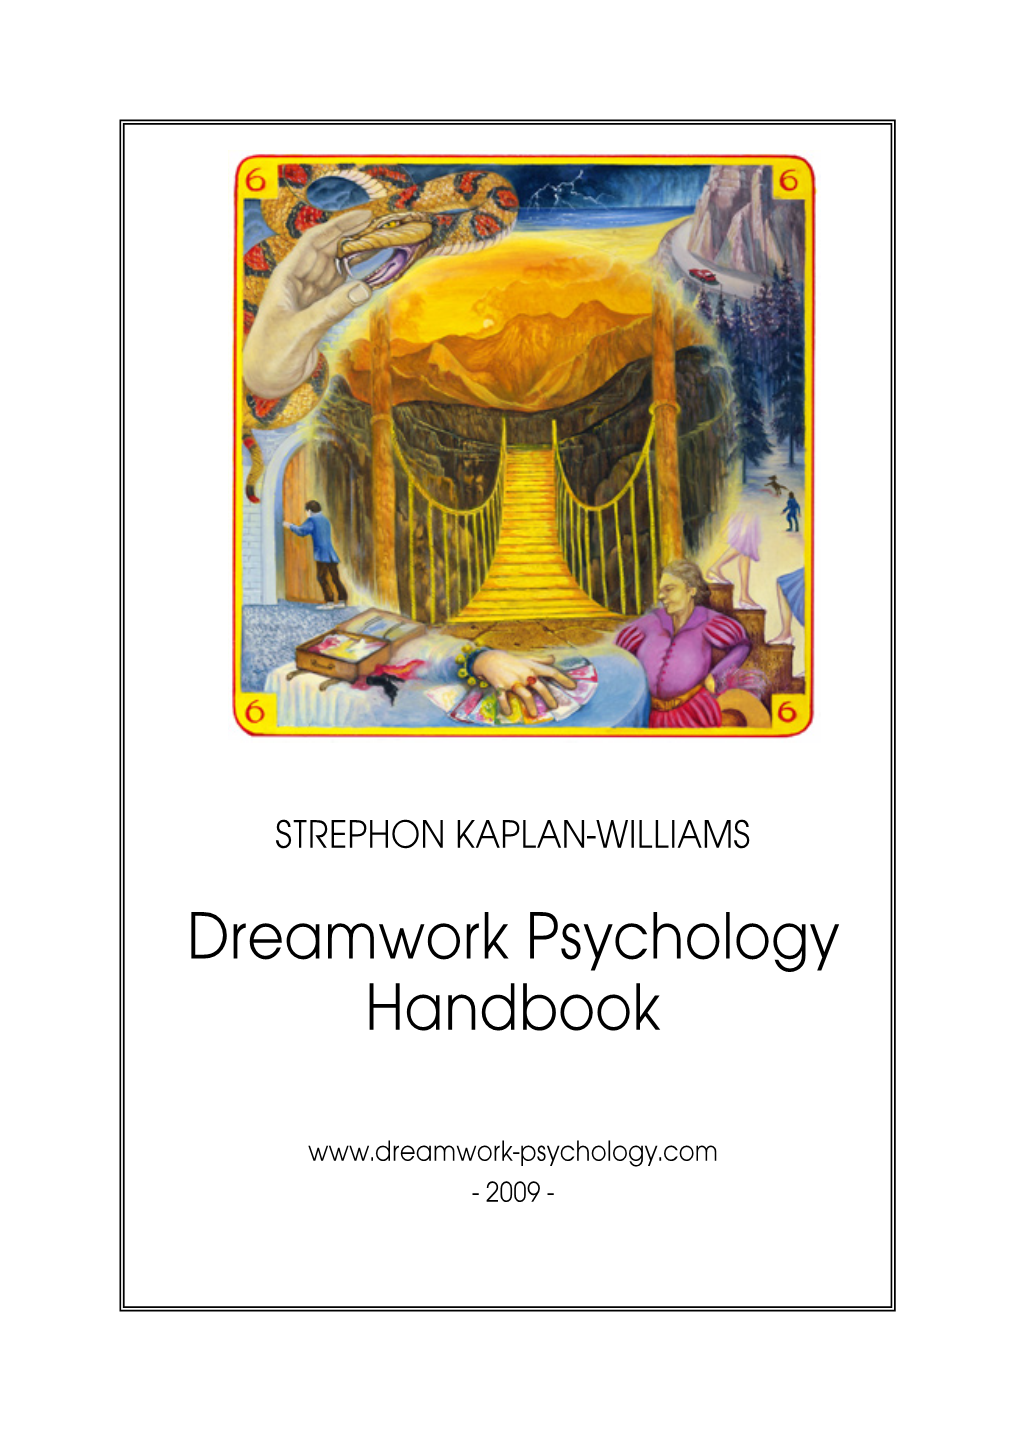 Dreamwork Psychology Handbook, by Strephon Kaplan-Williams